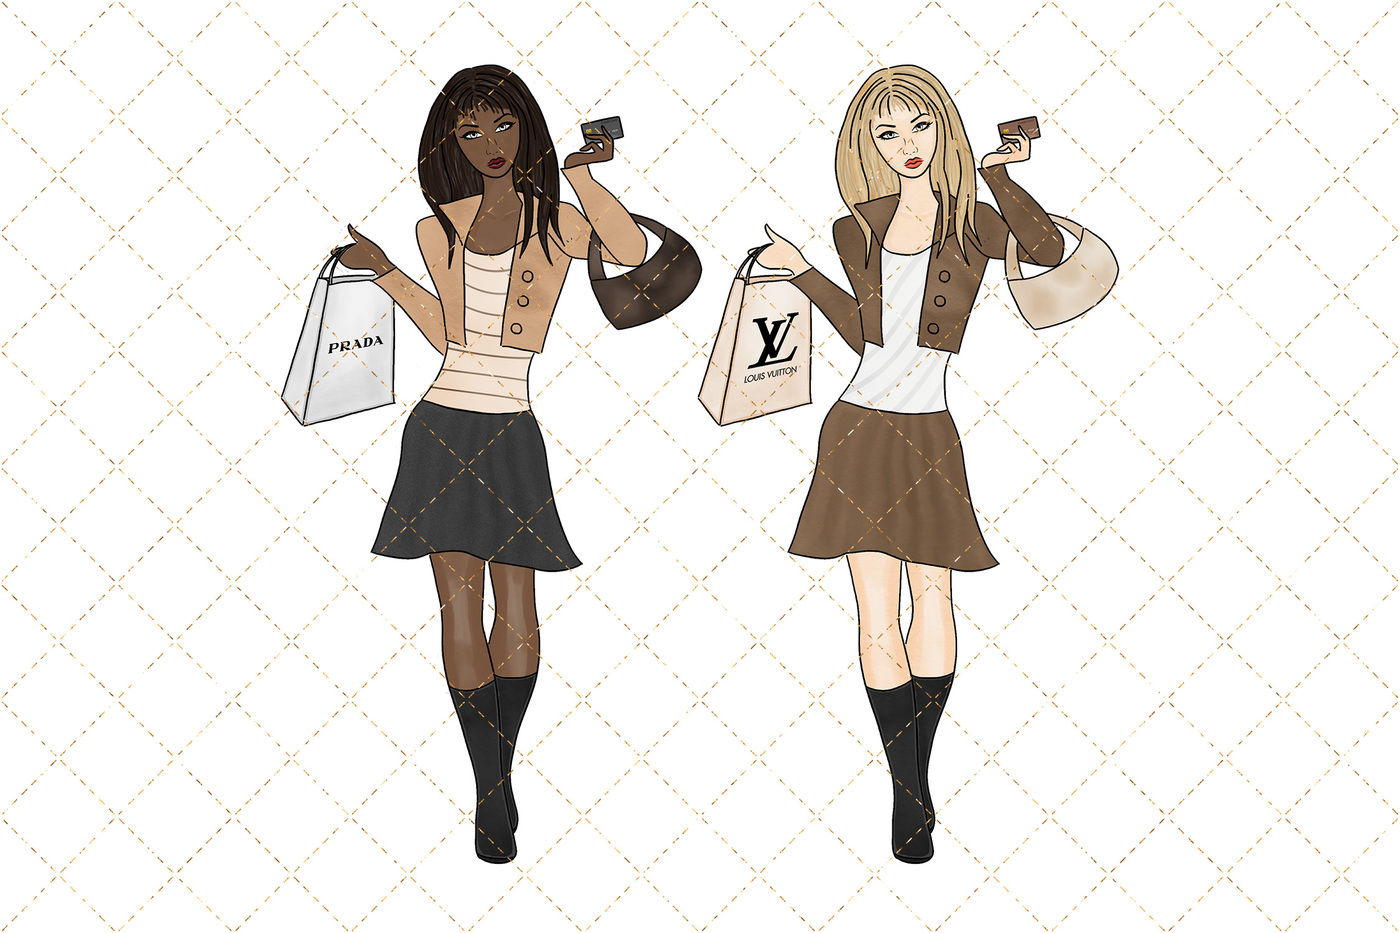 Shopping Girl Watercolor Clipart By PhantasiaDesign